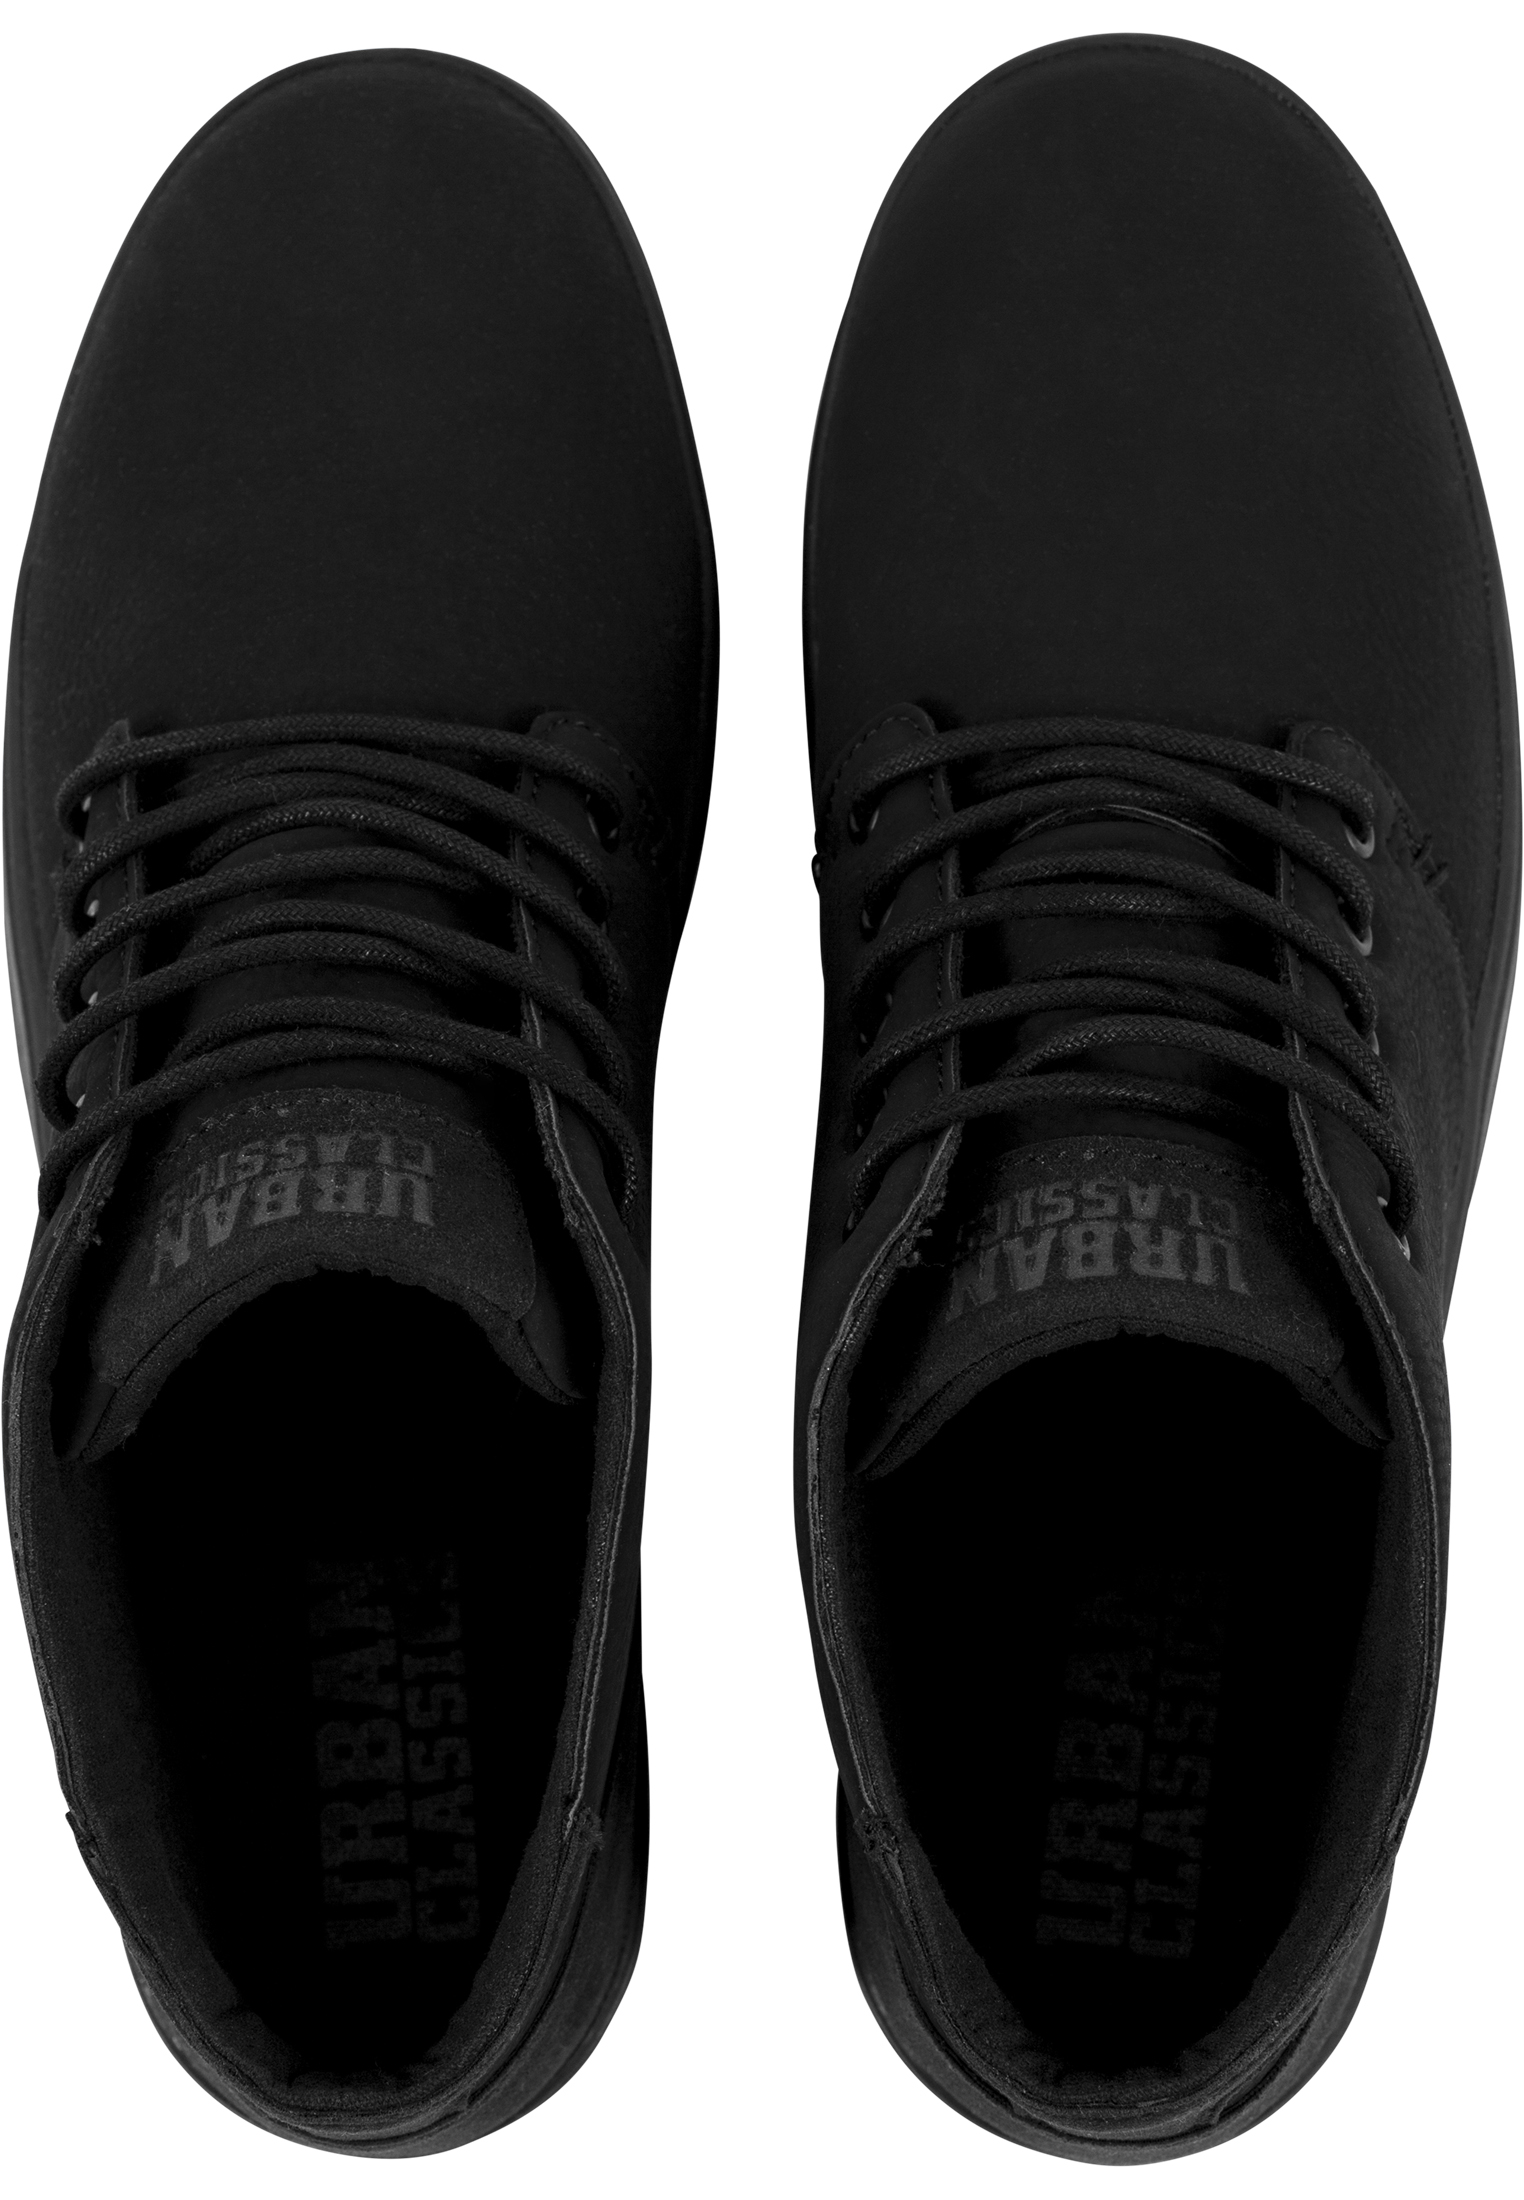 Schuhe Hibi Mid Shoe in Farbe blk/blk